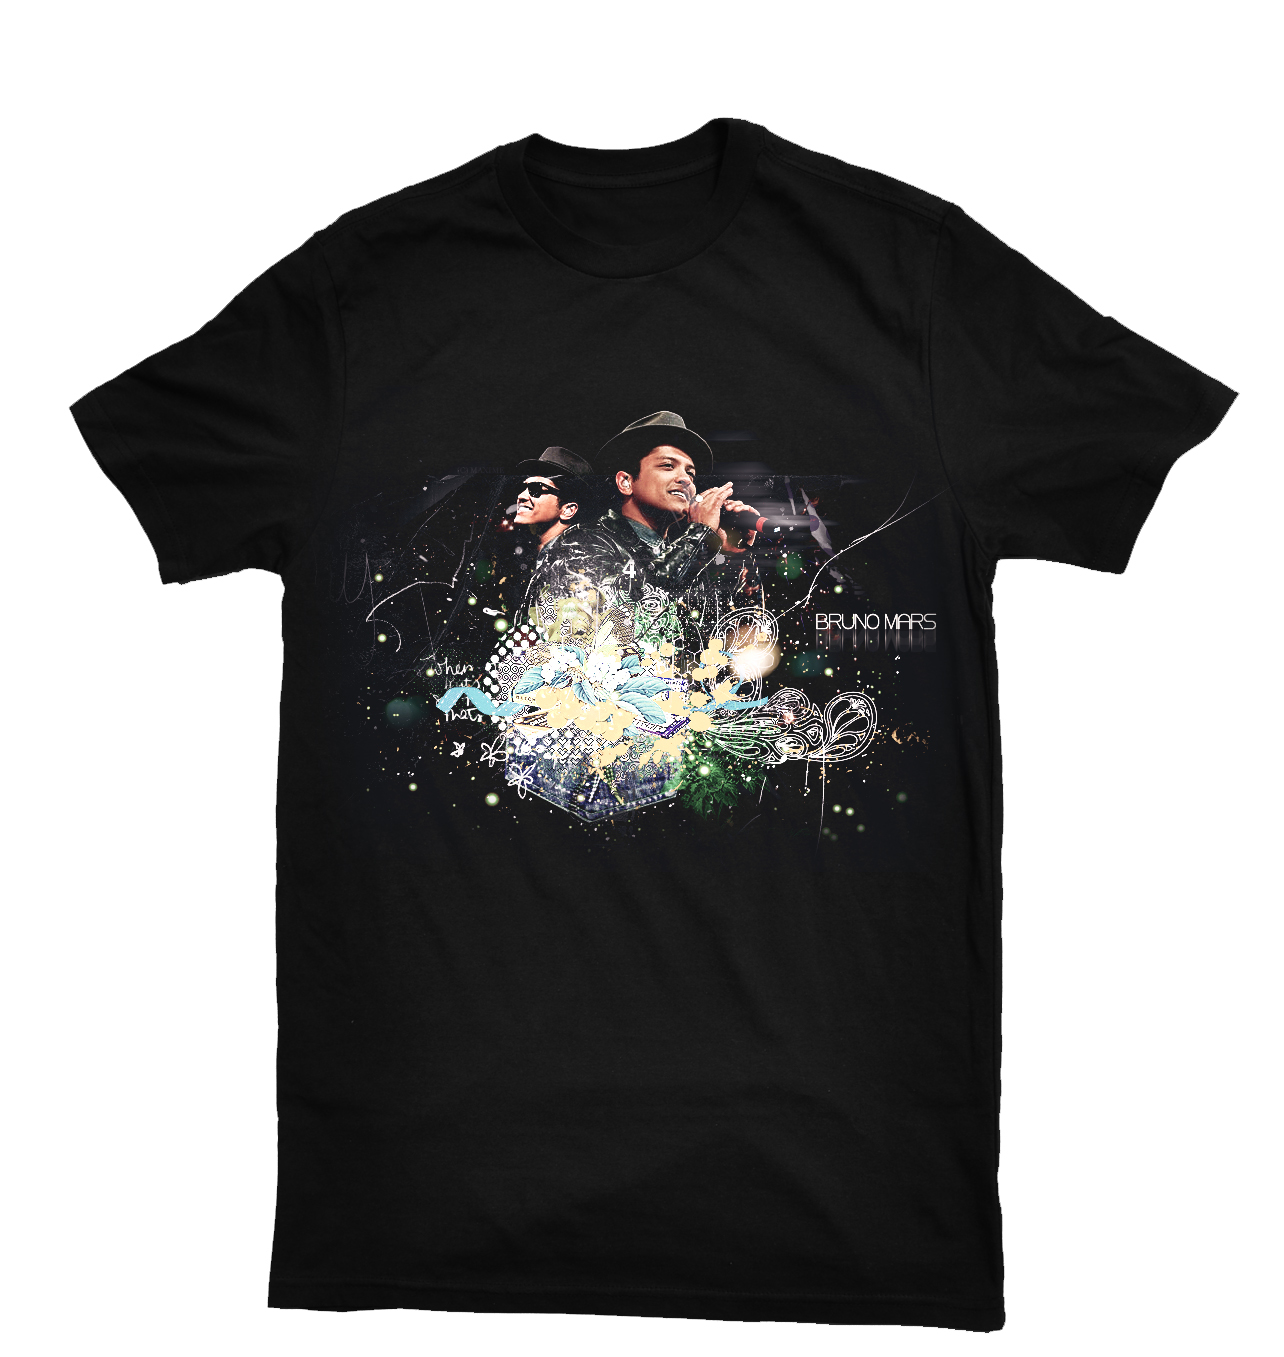 Bruno Mars T-Shirt by Maxoooow on DeviantArt